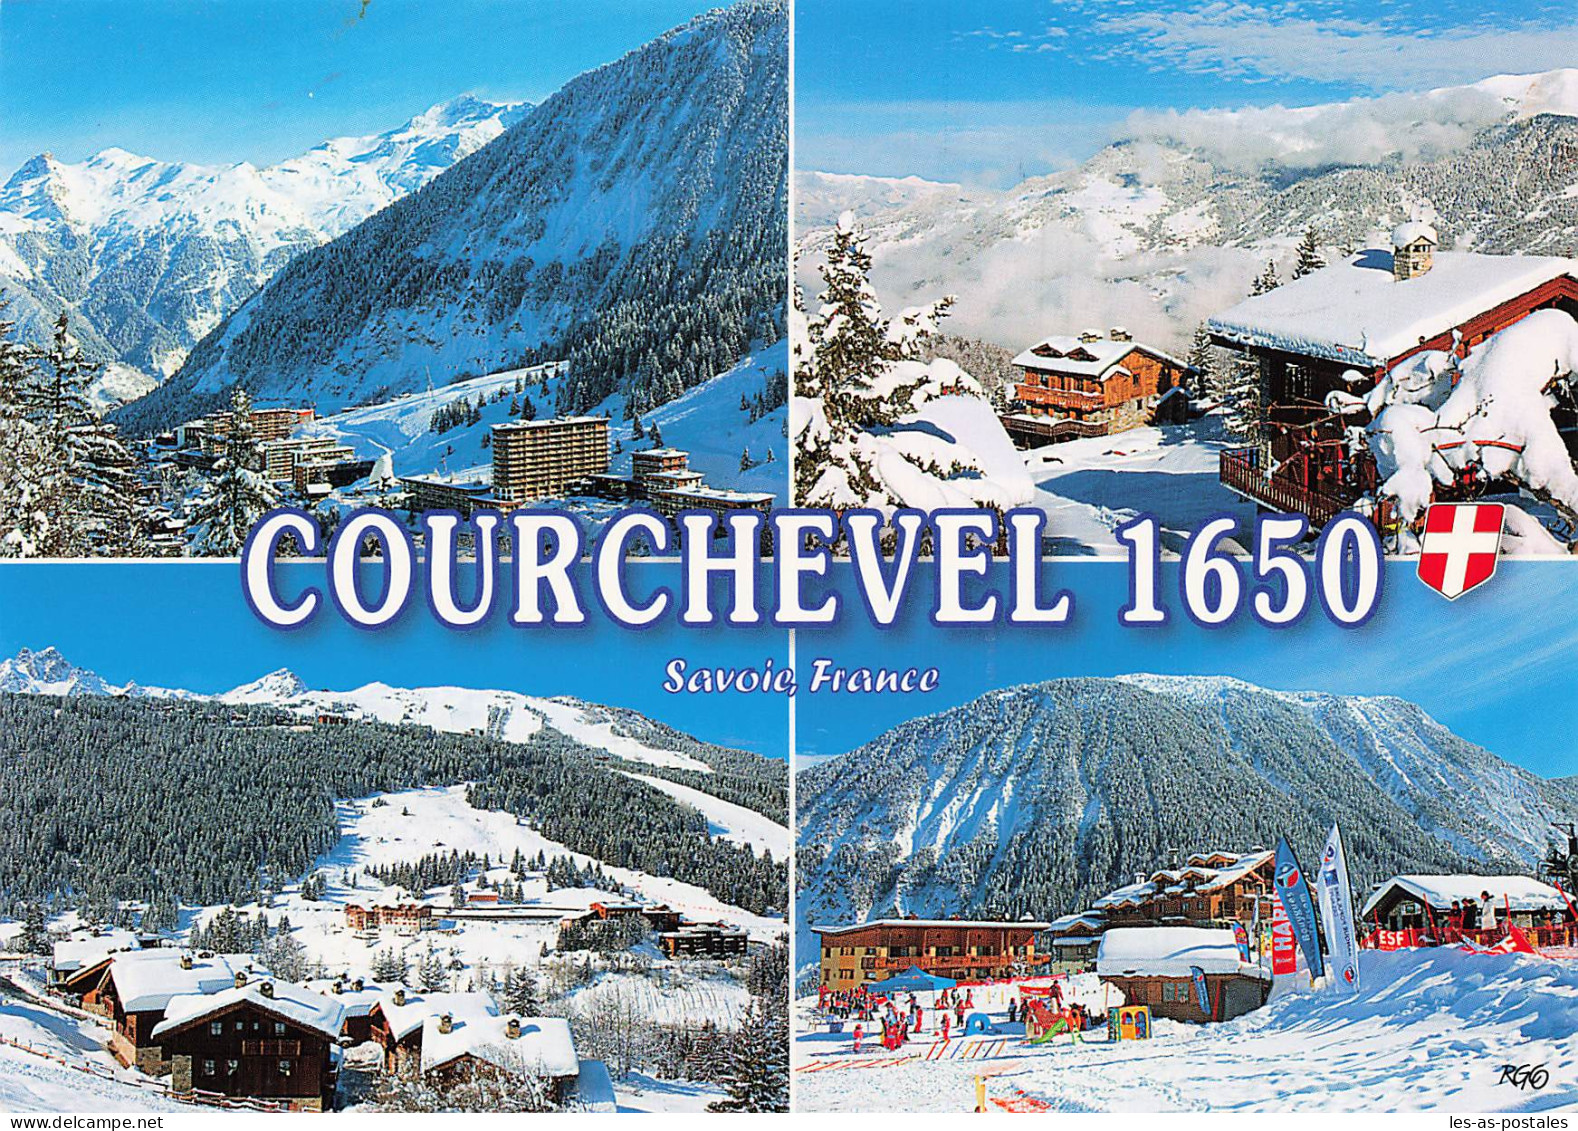 73 COURCHEVEL LES 3 VALLEES - Courchevel